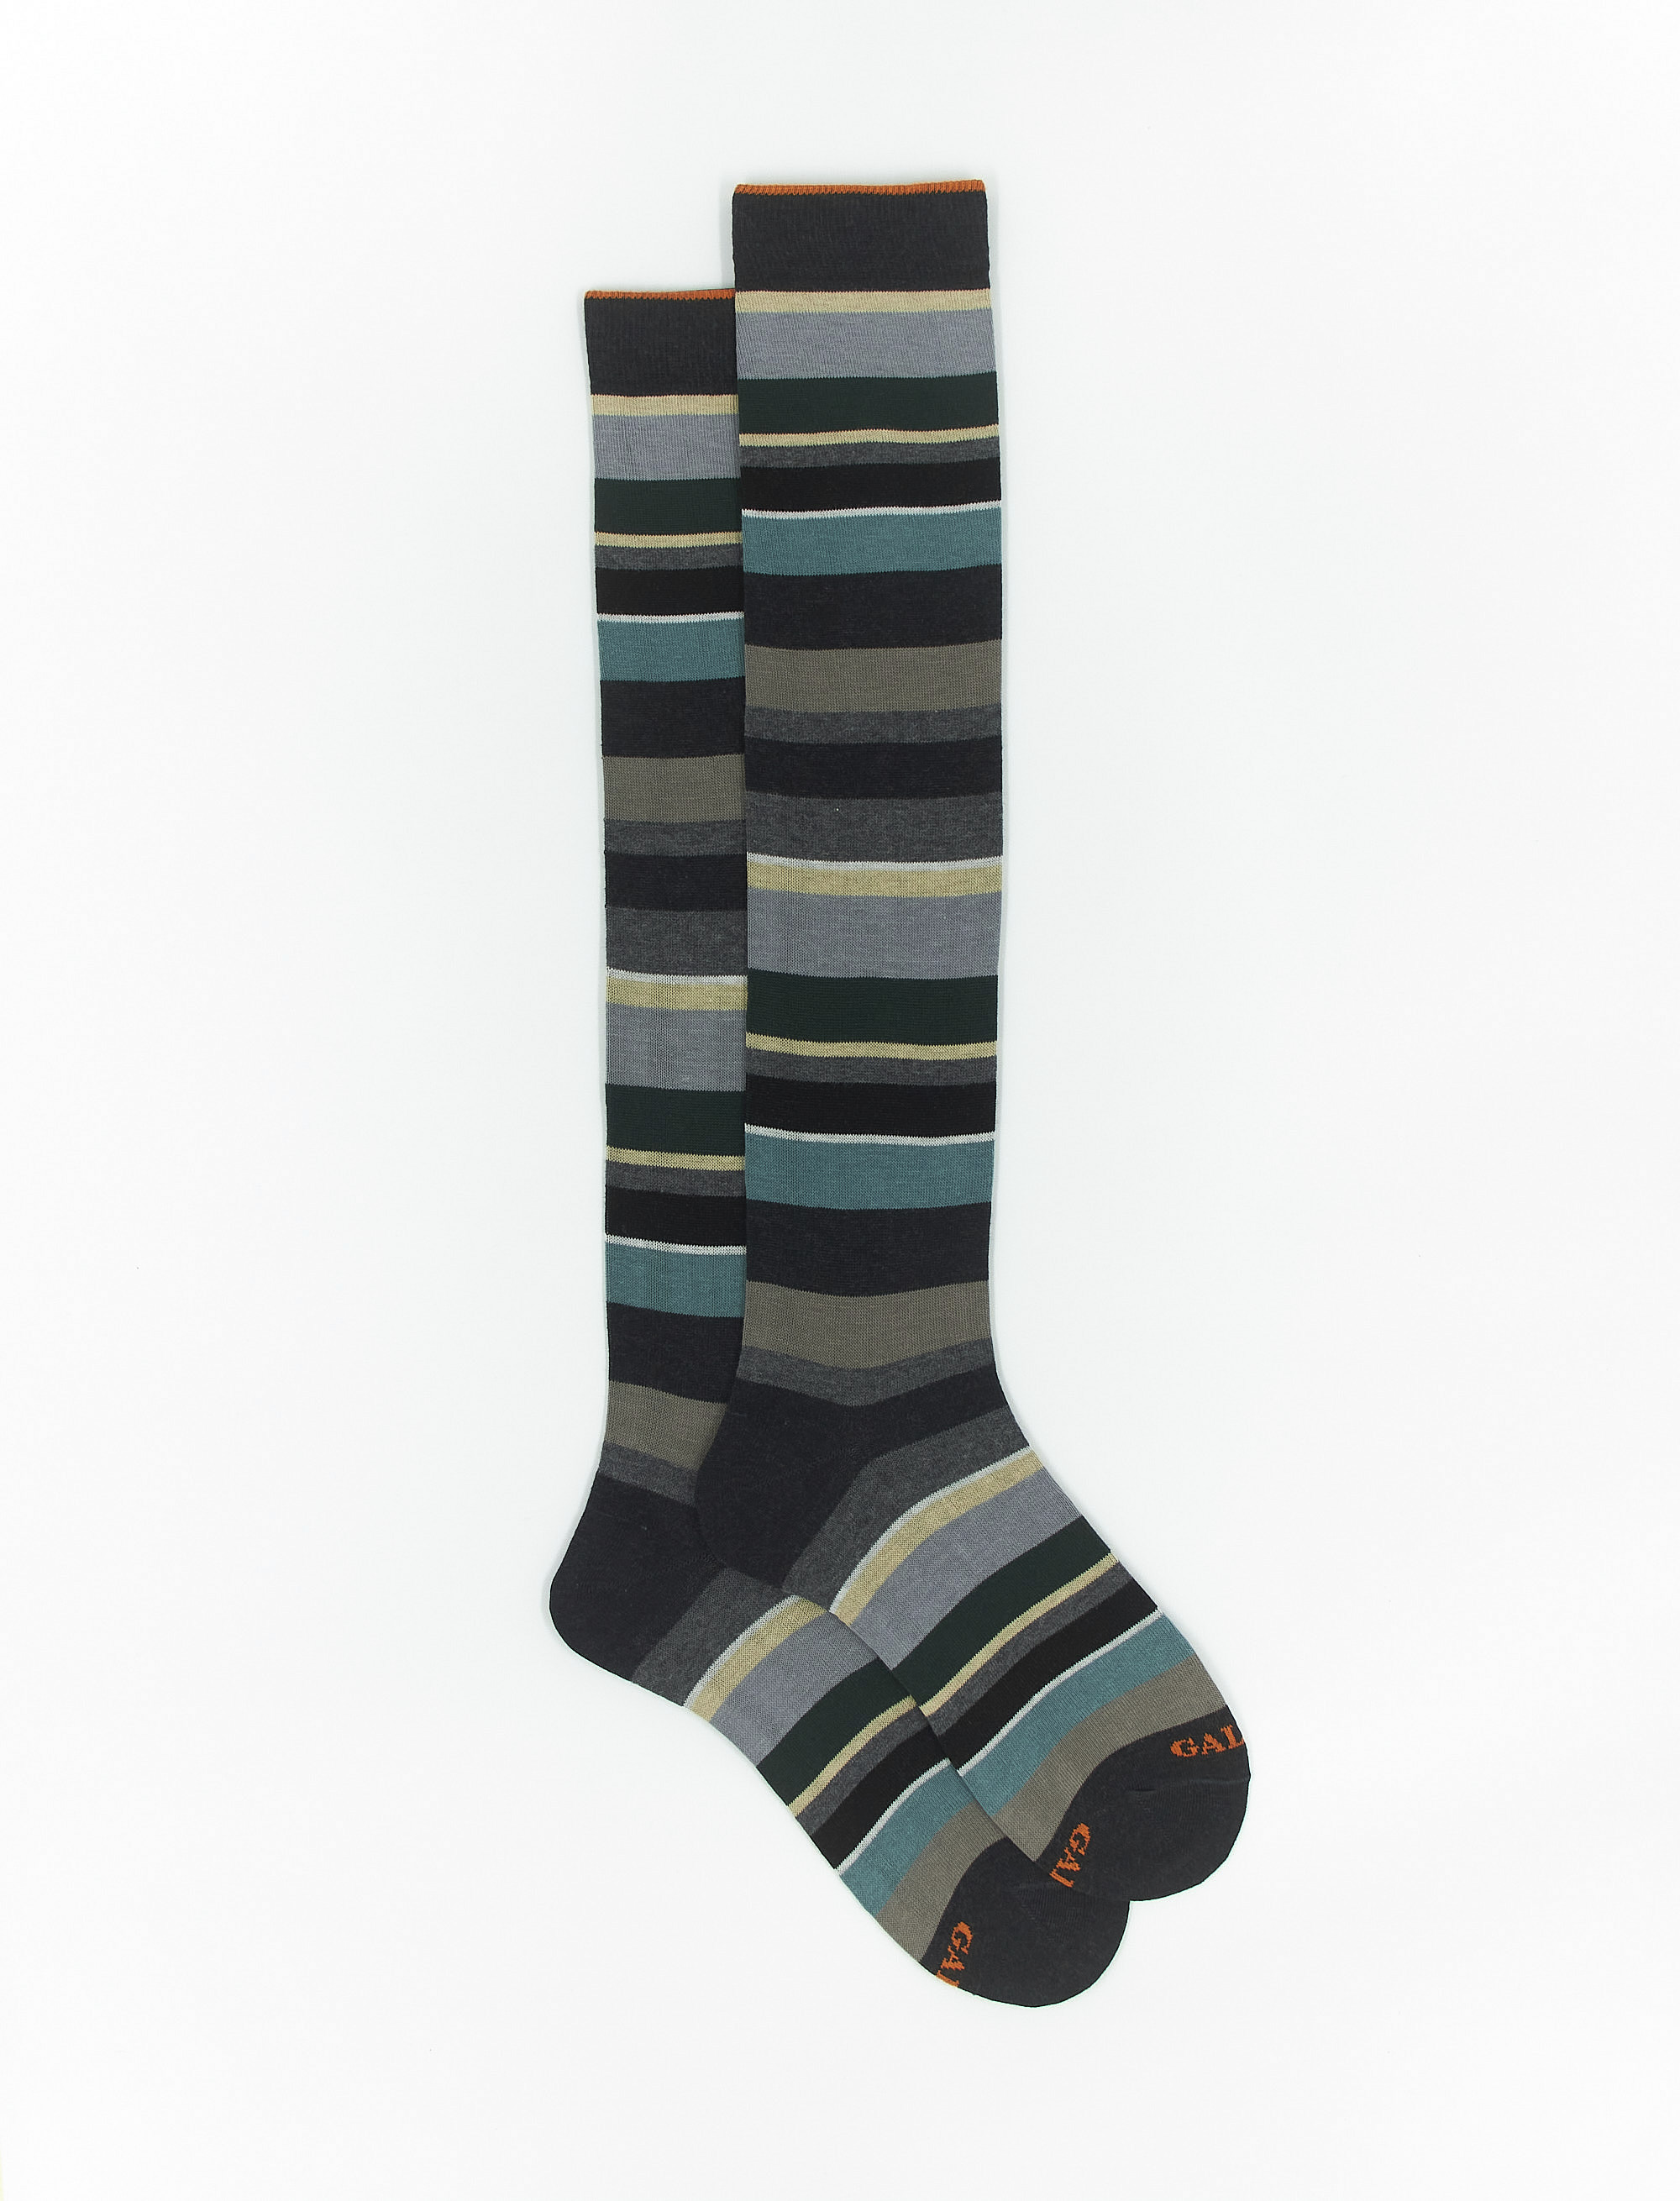 Calze lunghe donna cotone antracite righe multicolor - Gallo 1927 - Official Online Shop